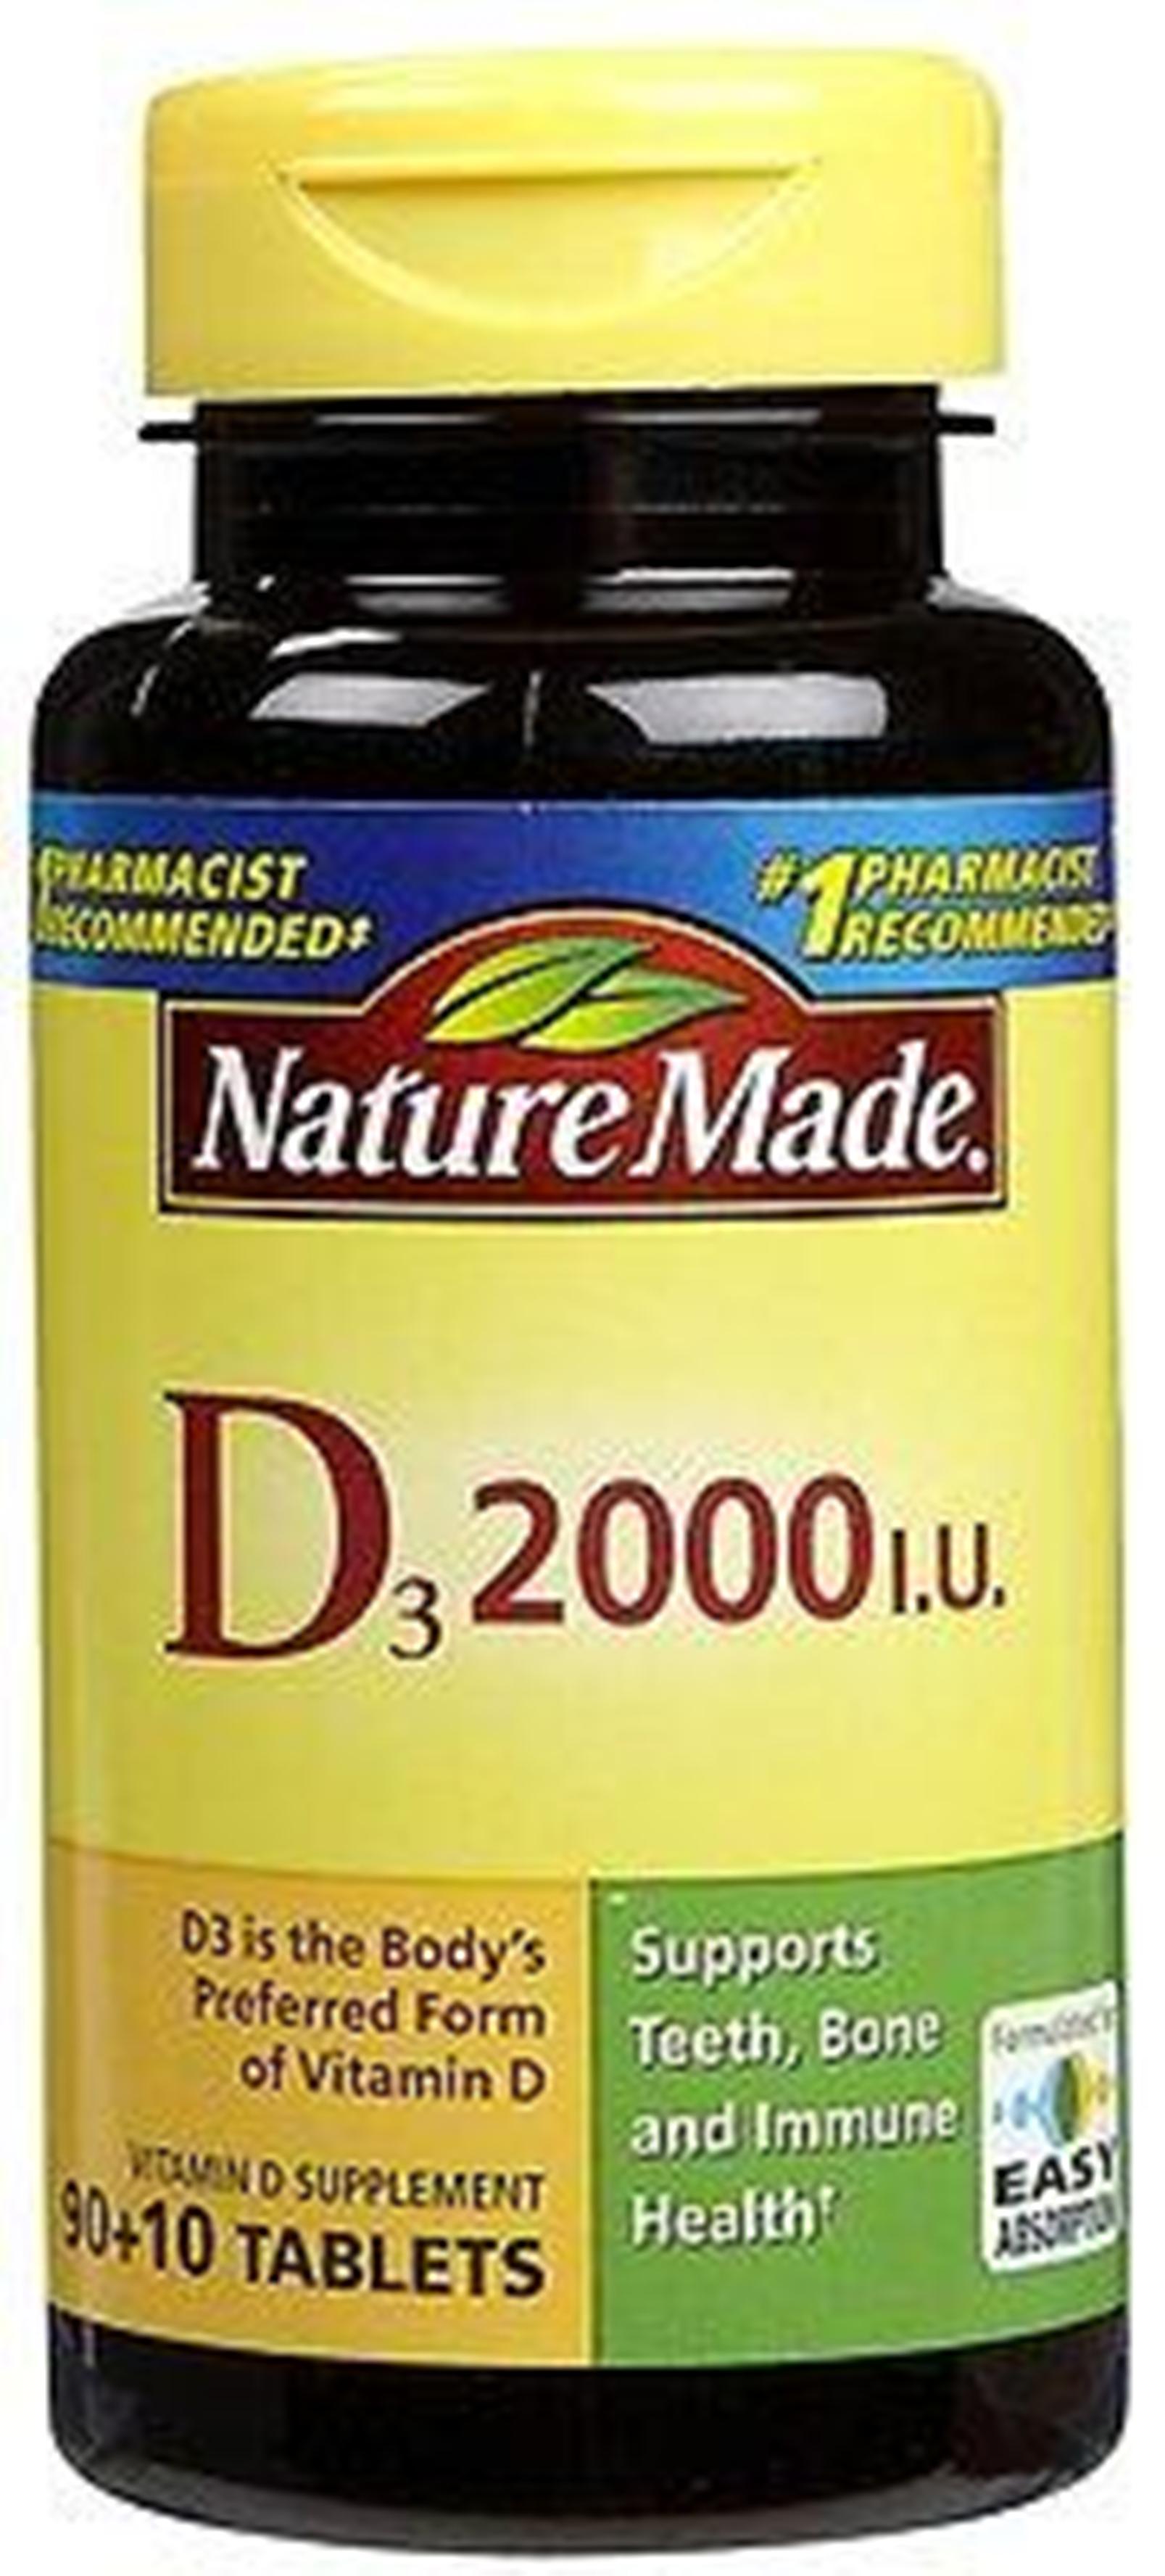 nature-made-vitamin-d3-2000-iu-100-tablets